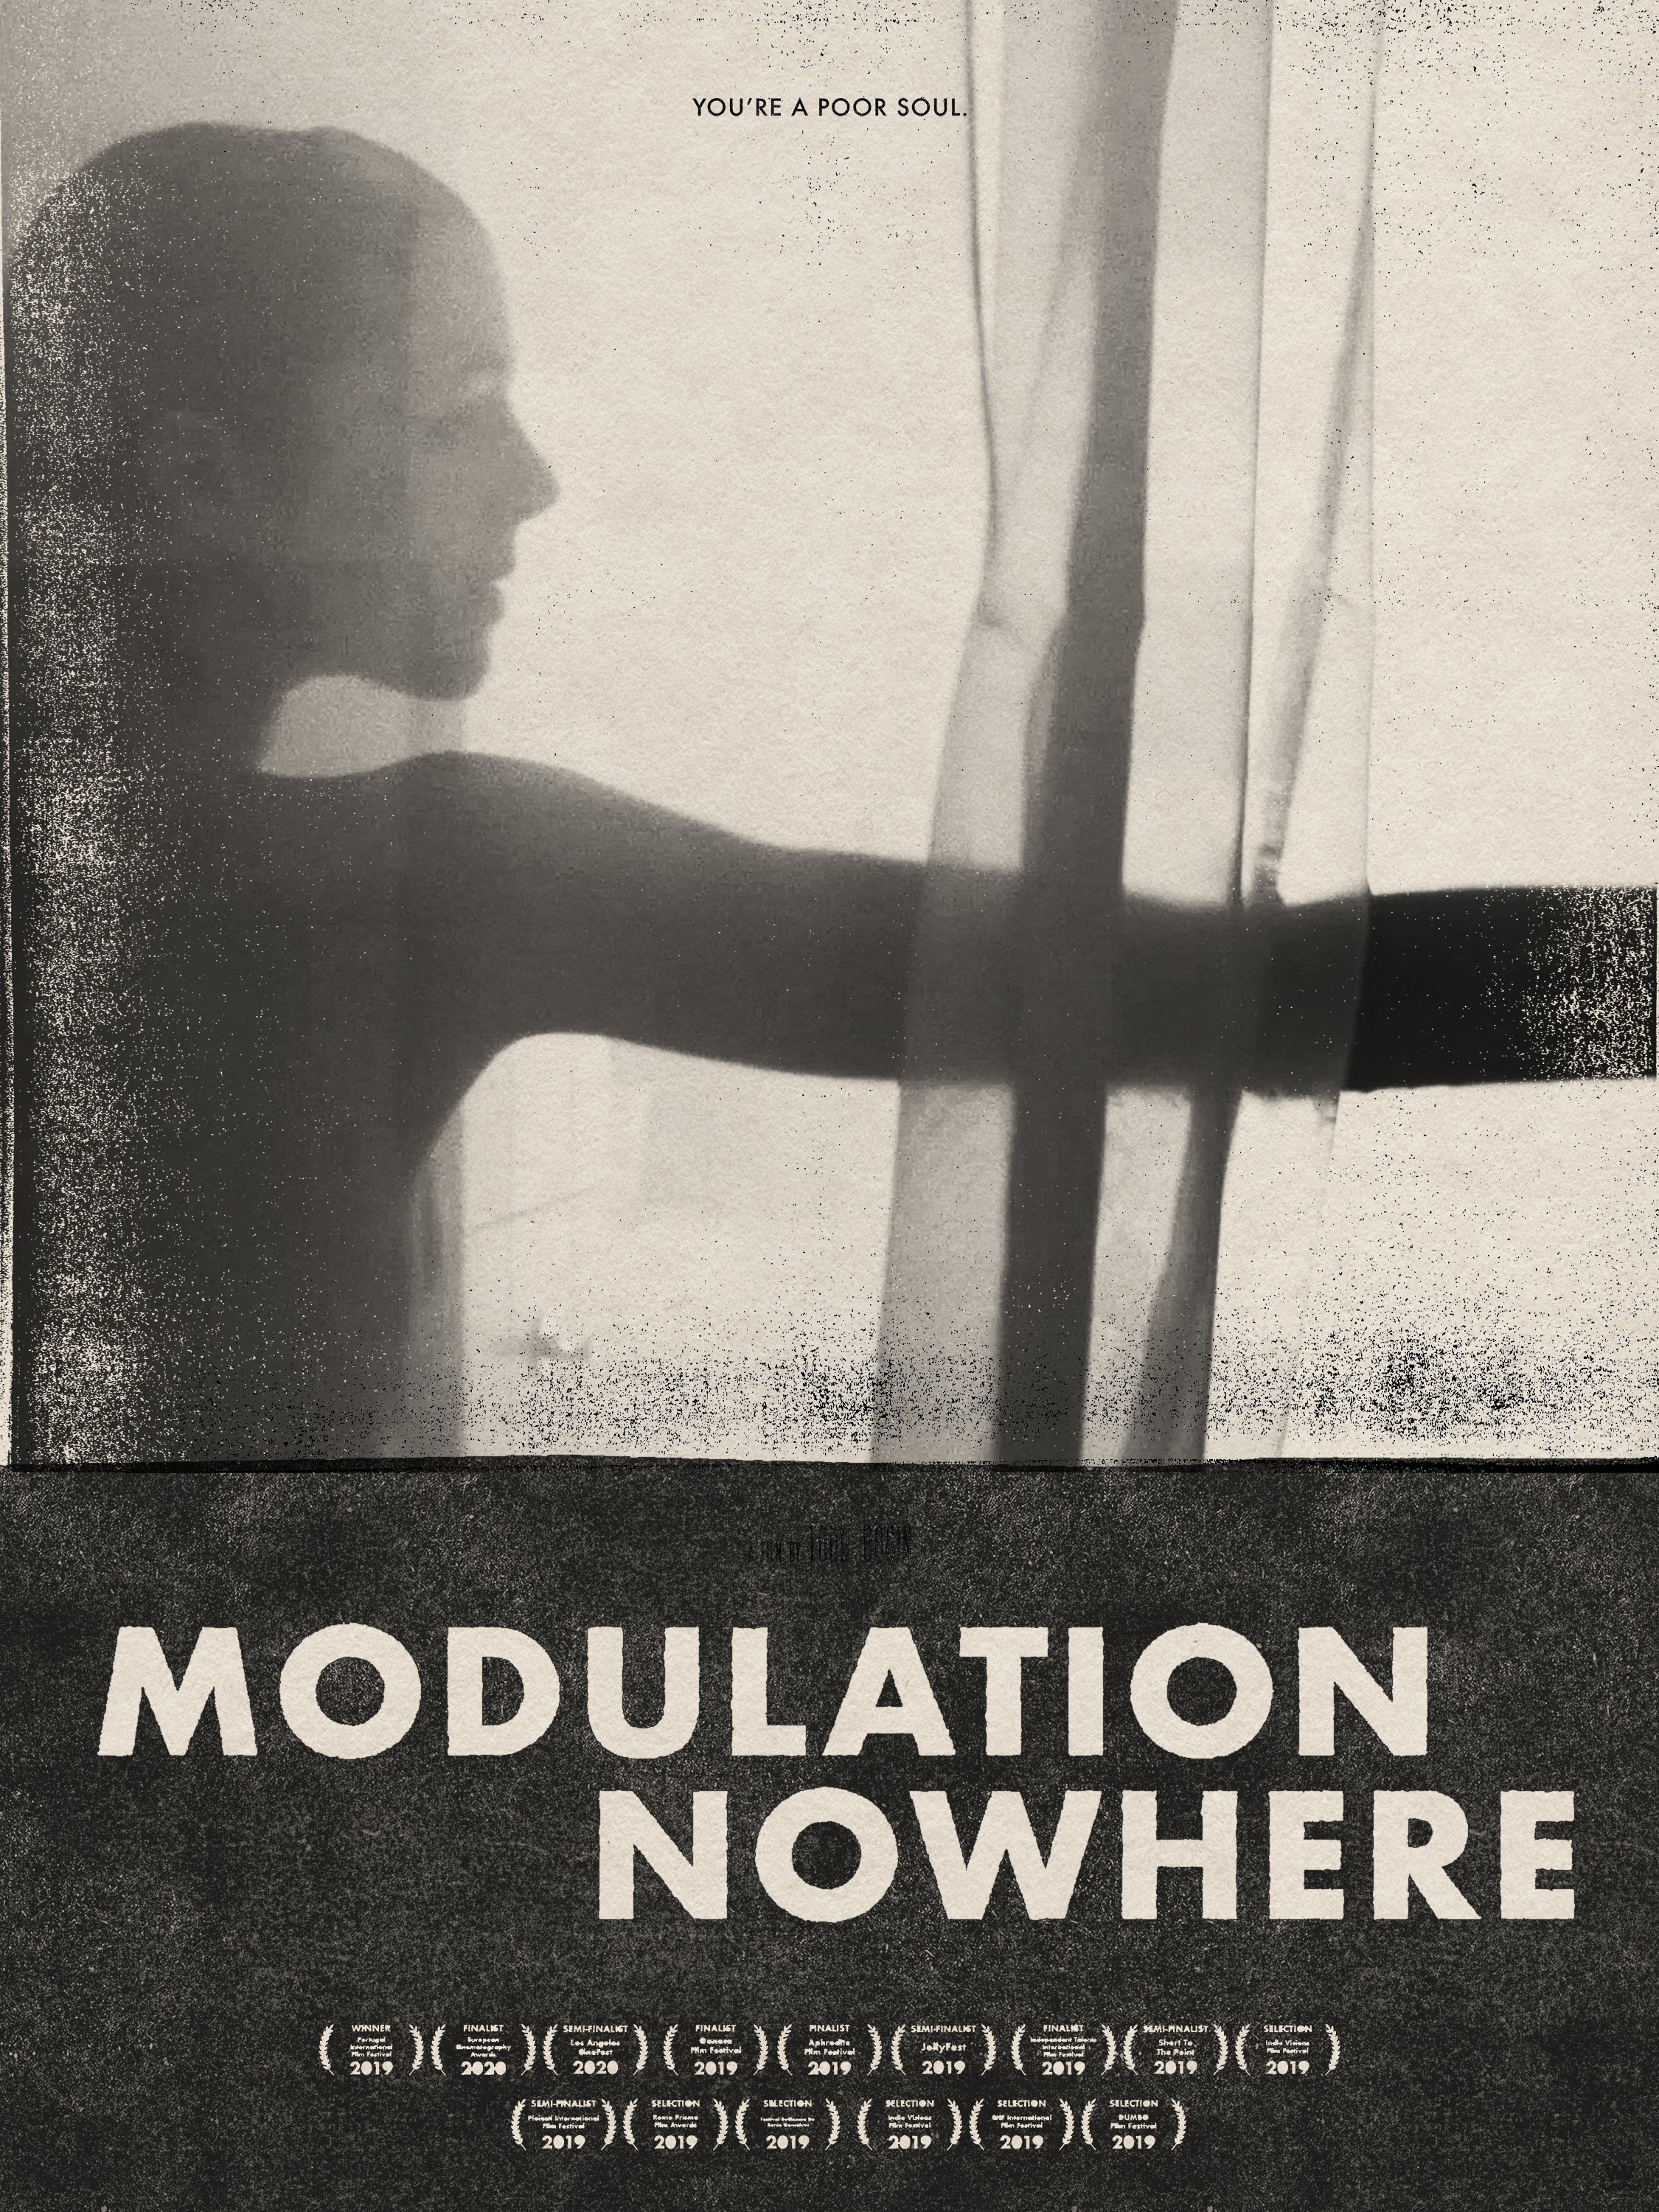 modulation nowhere_poster_black.jpg